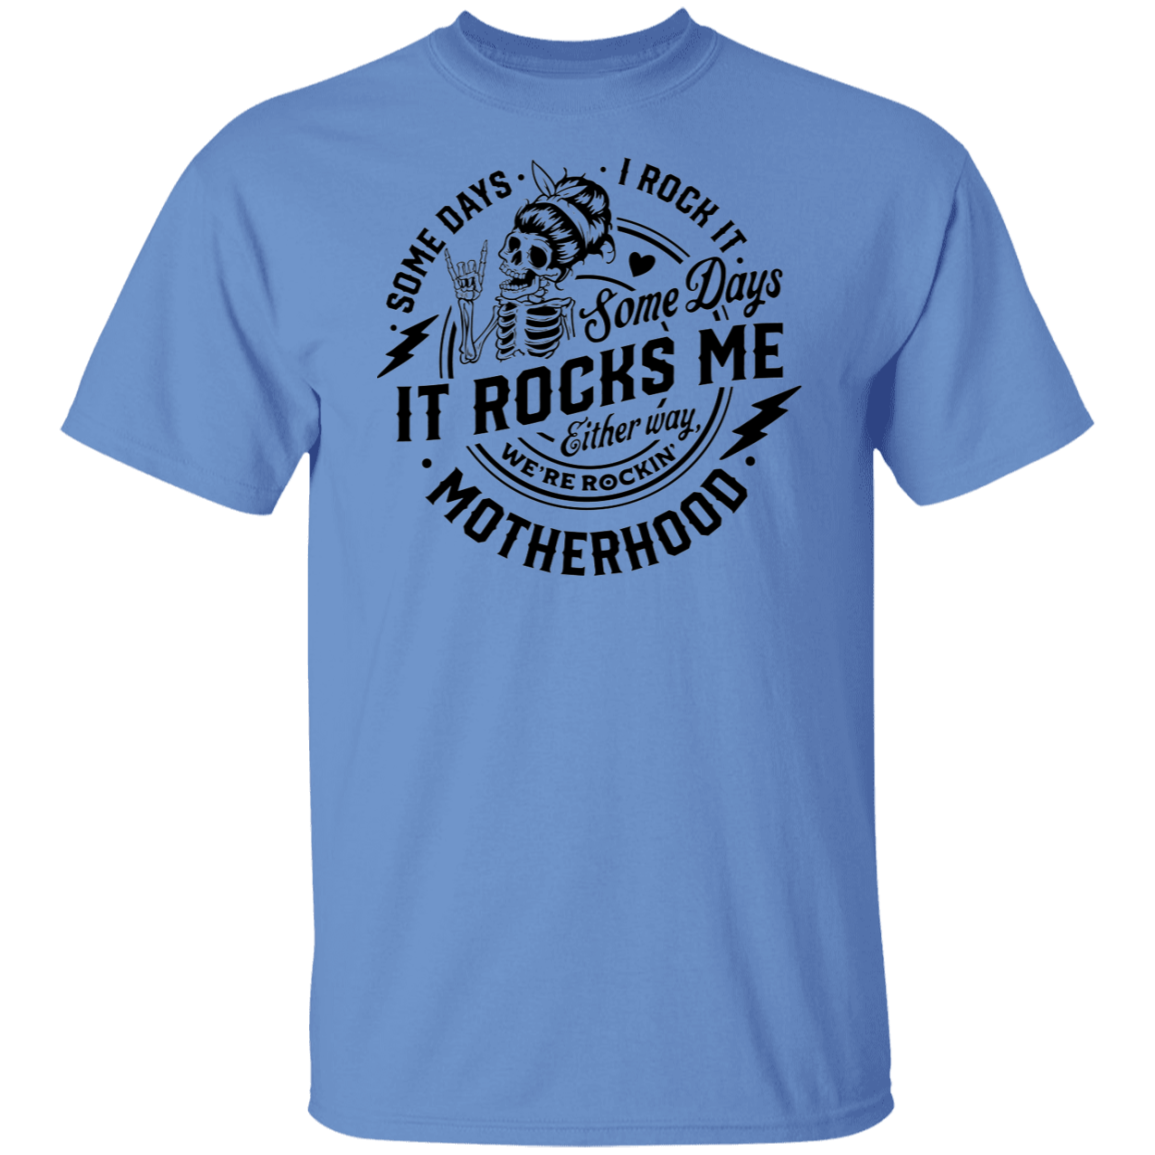 Some Days I Rock Motherhood Somedays It Rocks Me  T-Shirt